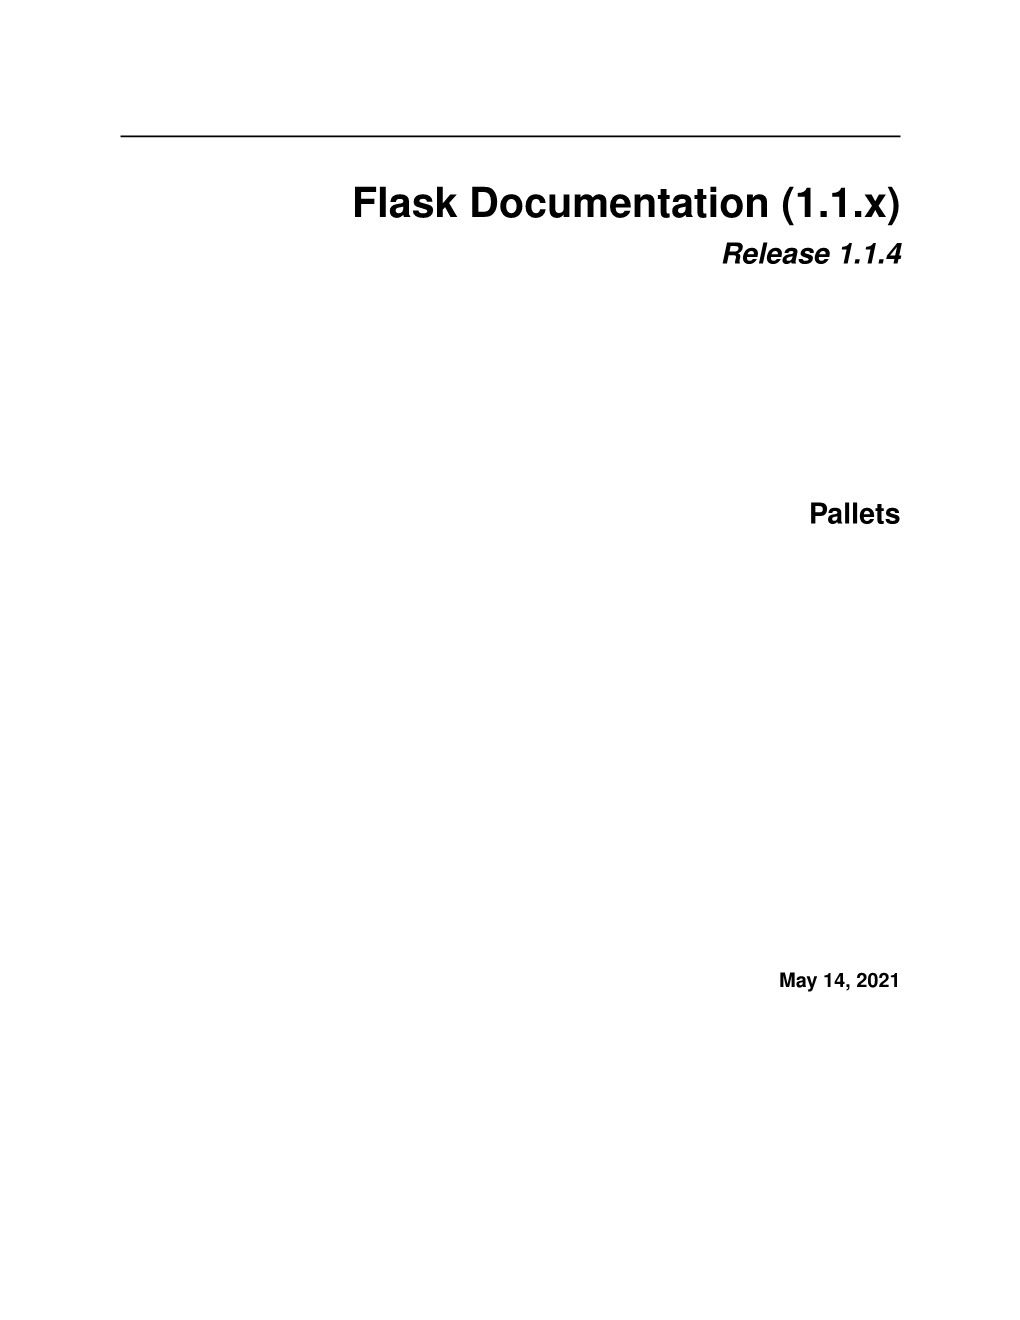 Flask Documentation (1.1.X) Release 1.1.4